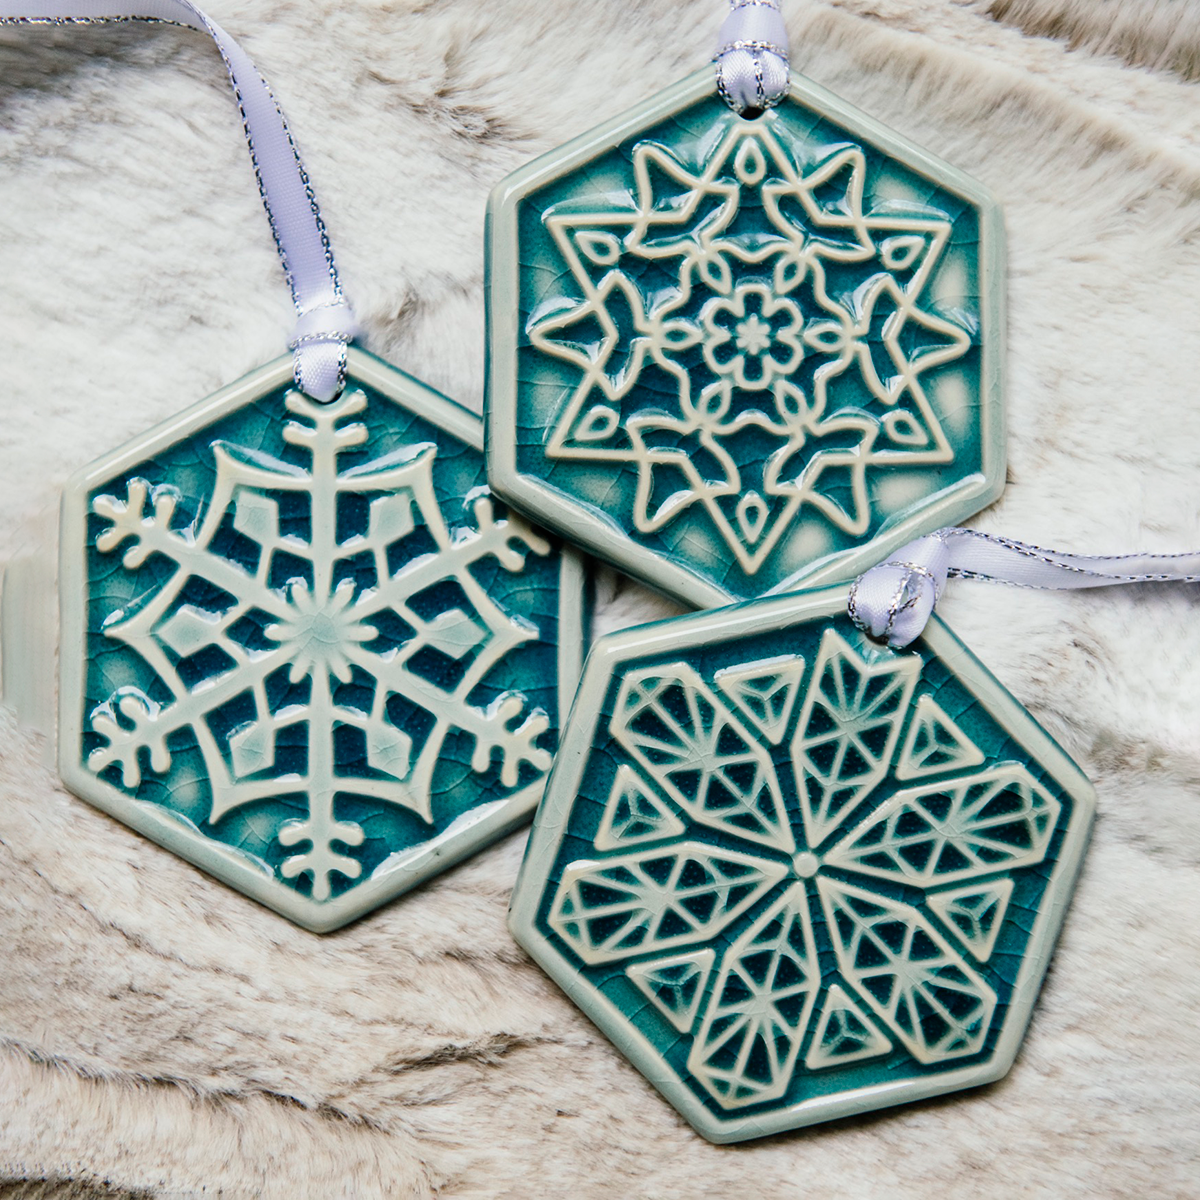 Ceramic Charm Necklace Snowflake